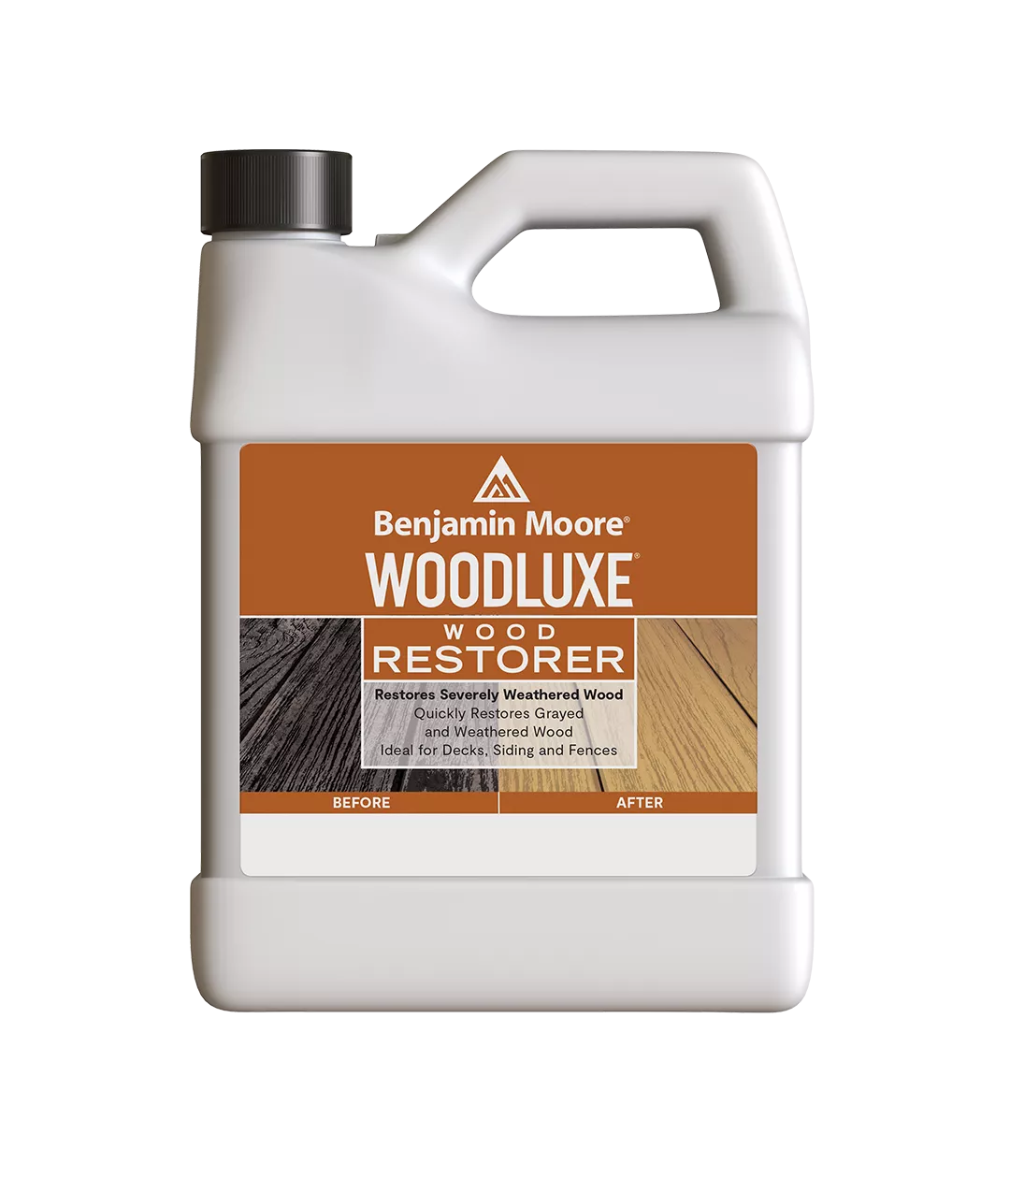 Benjamin Moore Woodluxe Wood Restorer available at Wallauer.